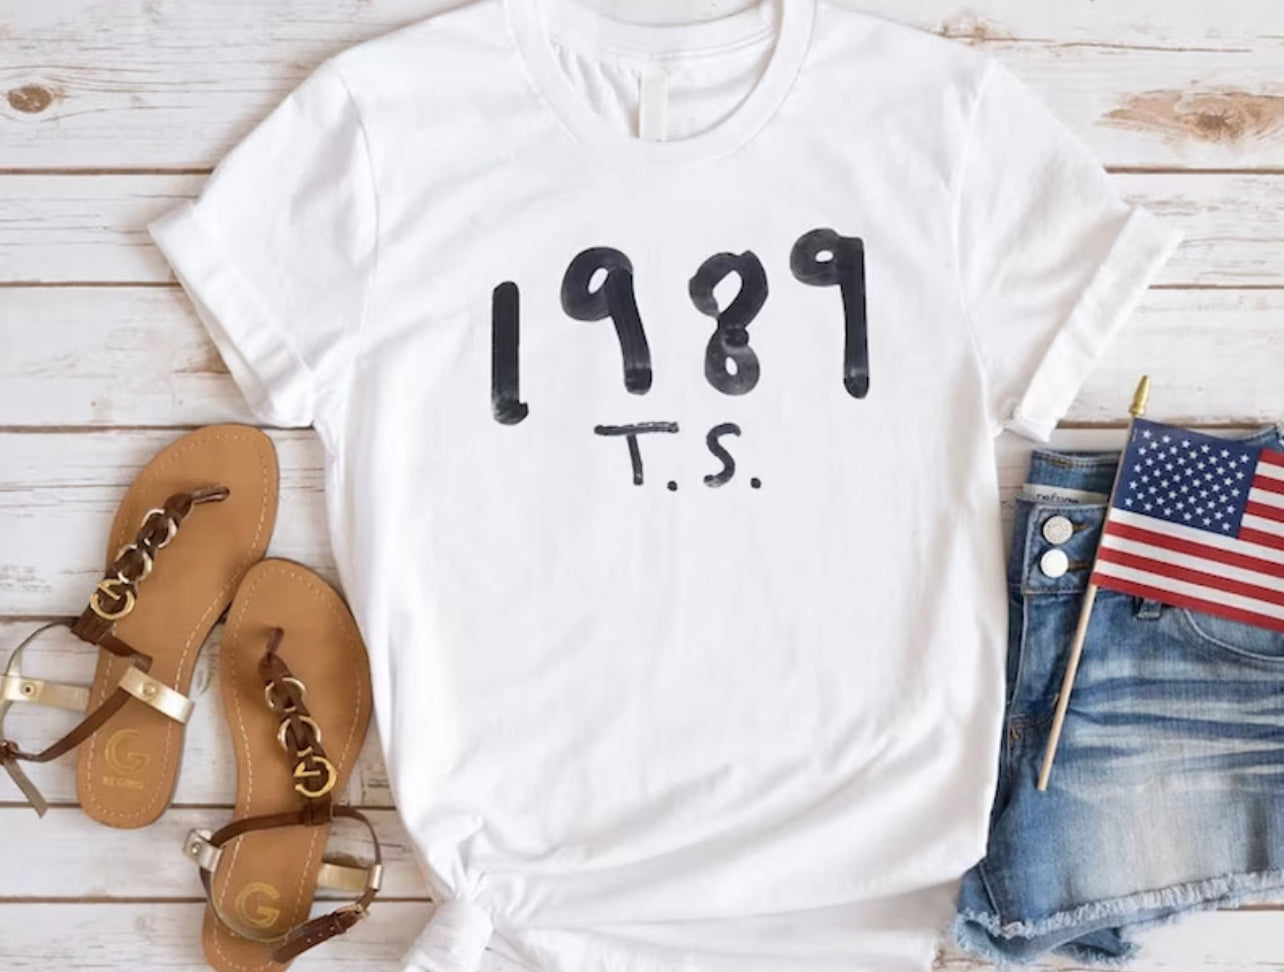 T.S. 1989 Shirt| Taylor shirt| T swift shirt| 1989 taylor swift tee| gift for taylor swift fan| Taylor shirt